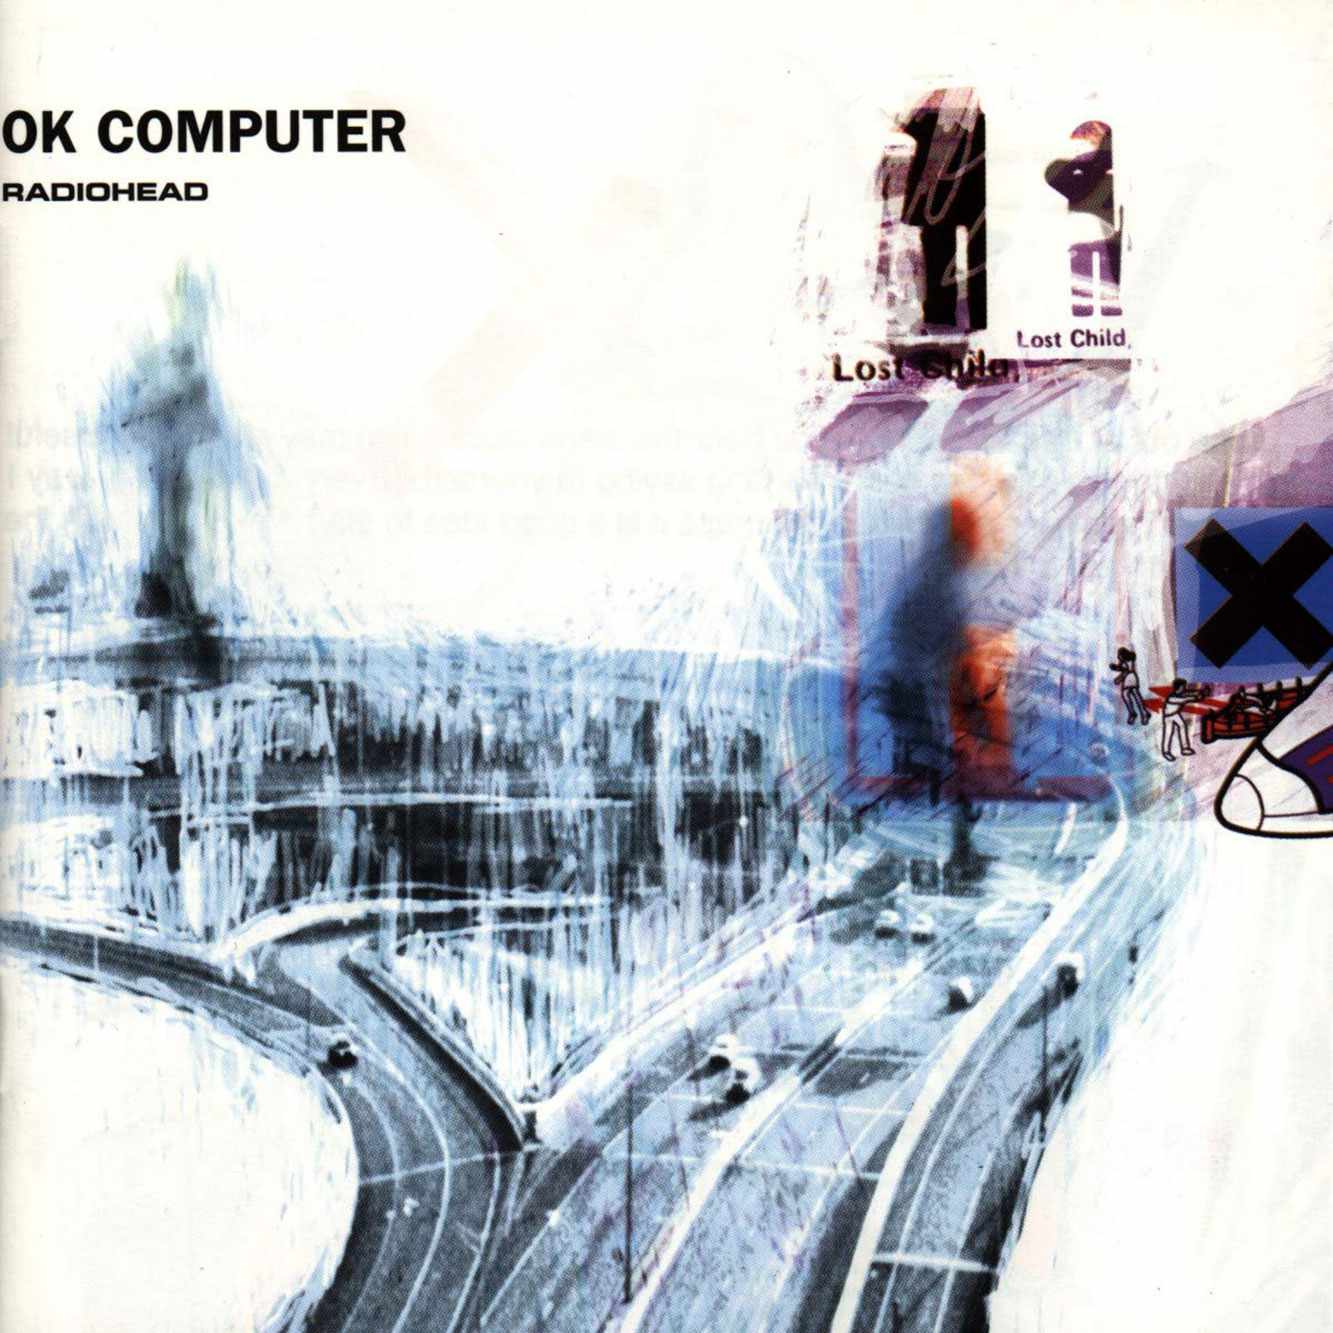 Ok computer by Radiohead